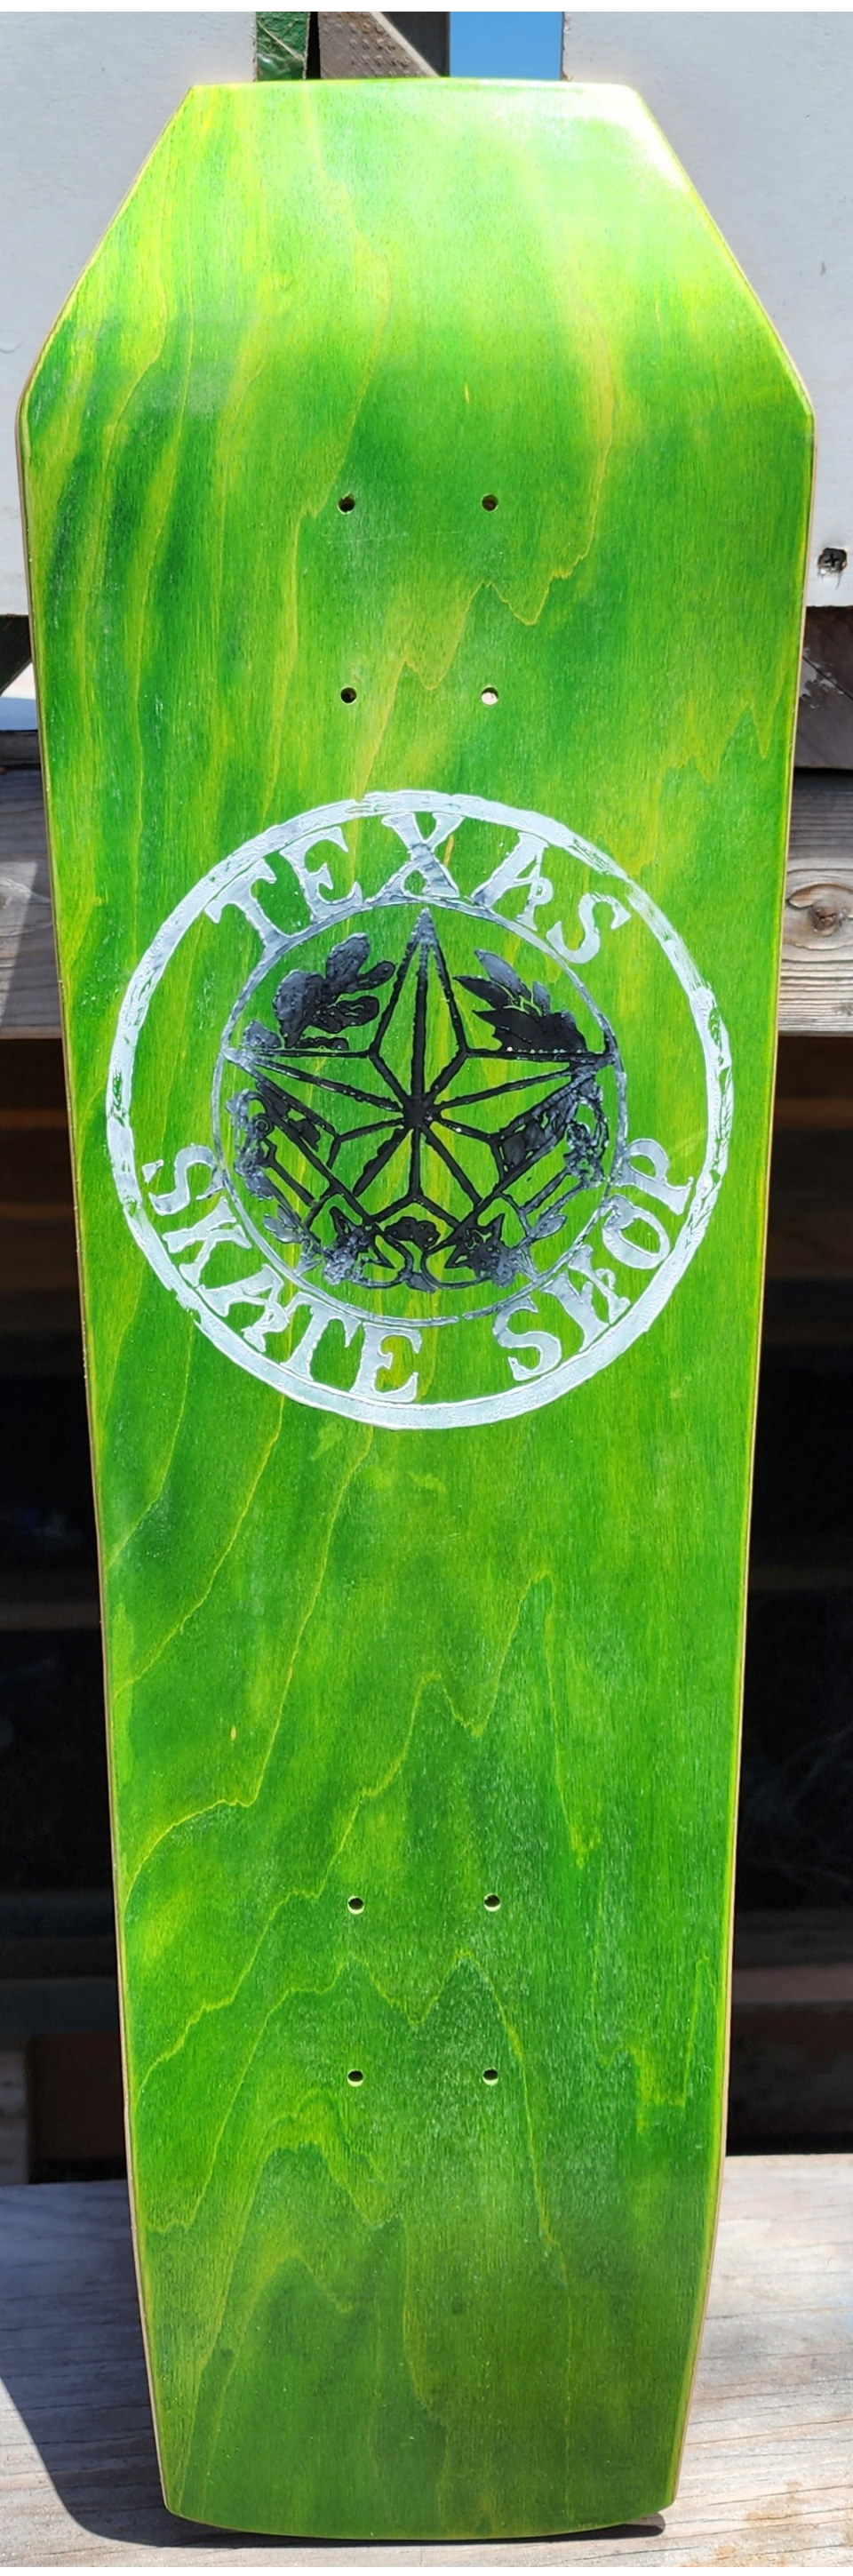 coffin shaped skateboard deck